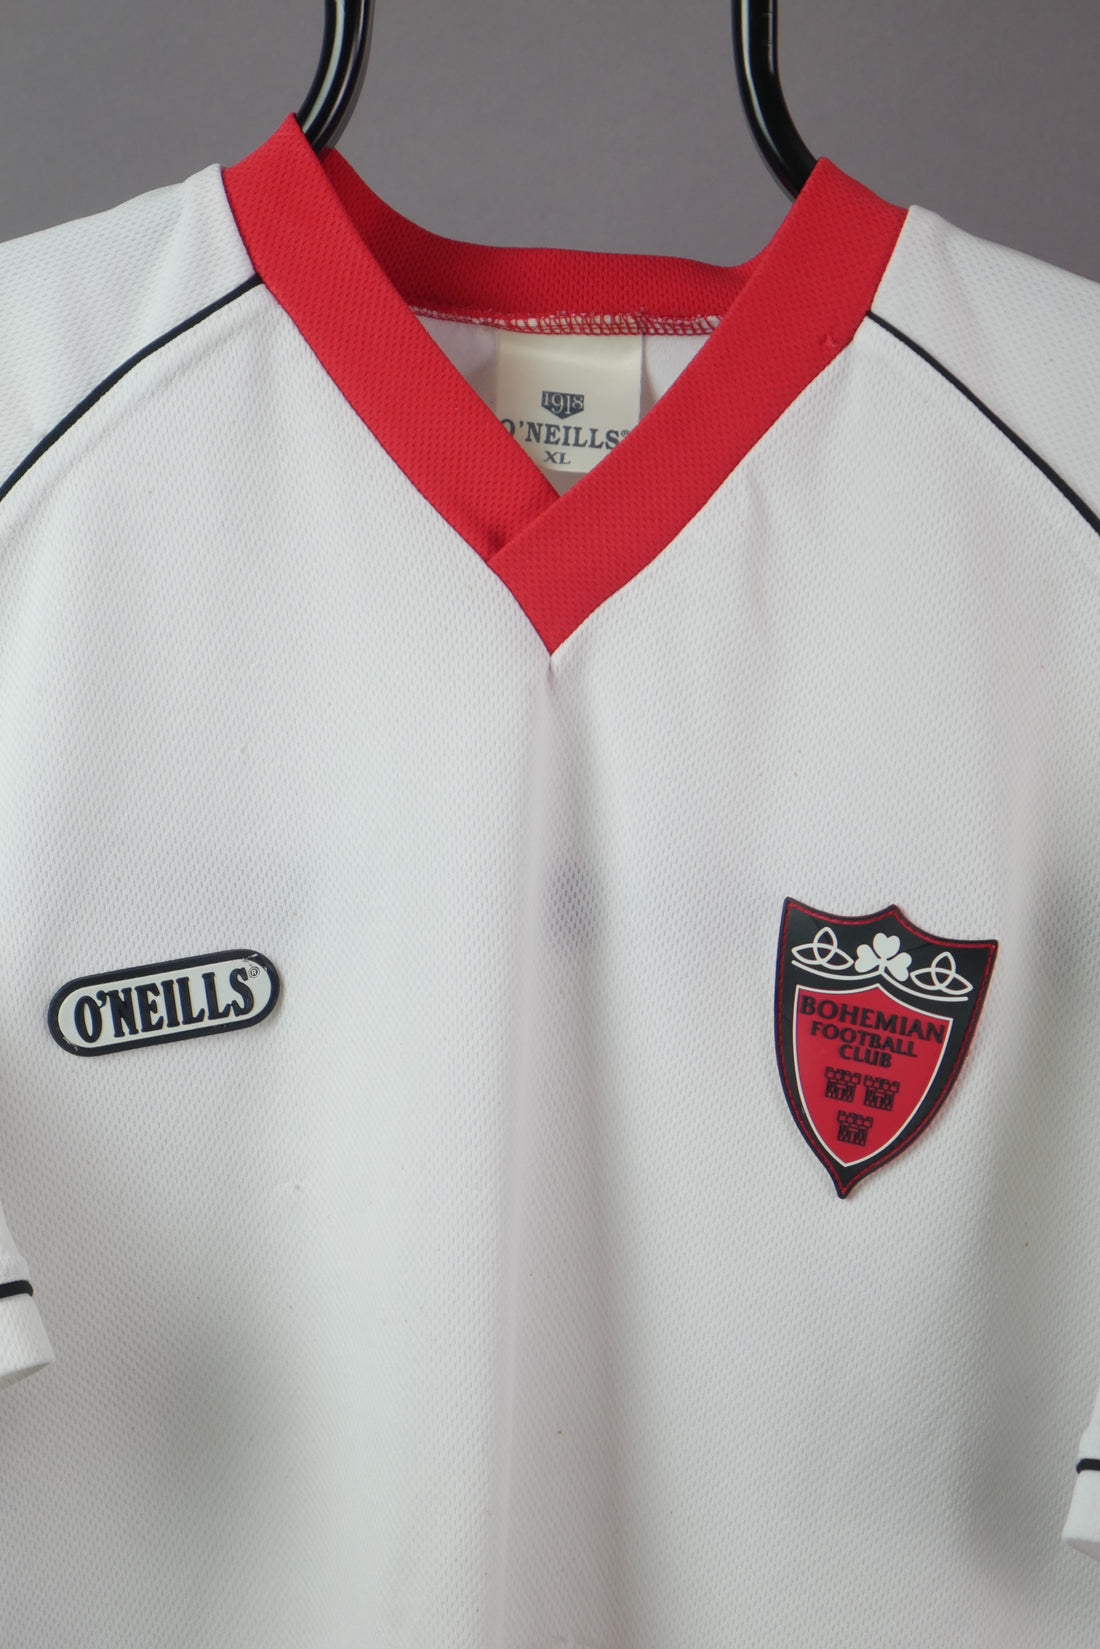 The O'Neills Bohemian Football Club T-Shirt (XL)